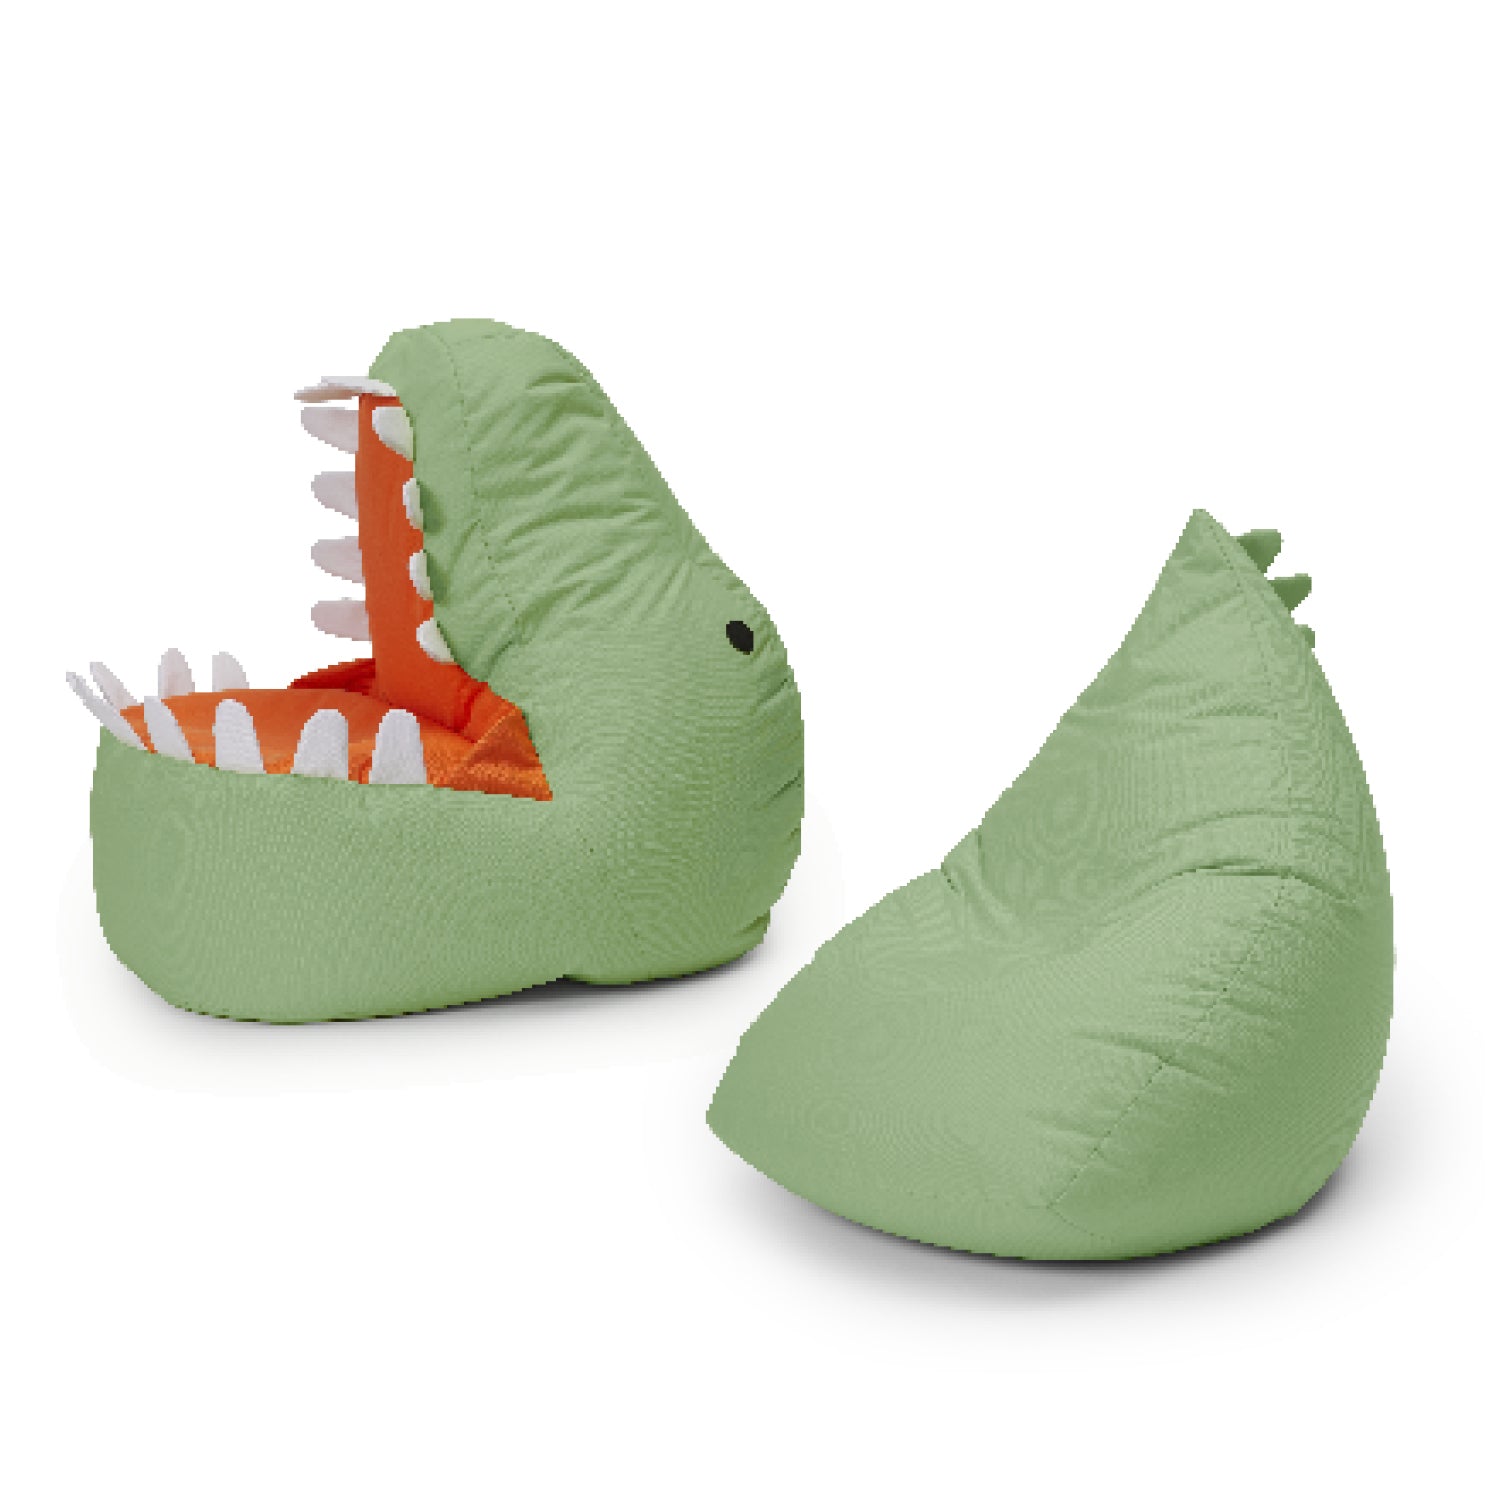 Kindersitzsack-Set "Dino" (2-tlg.) - indoor & outdoor - Pastell Grün von LUMALAND